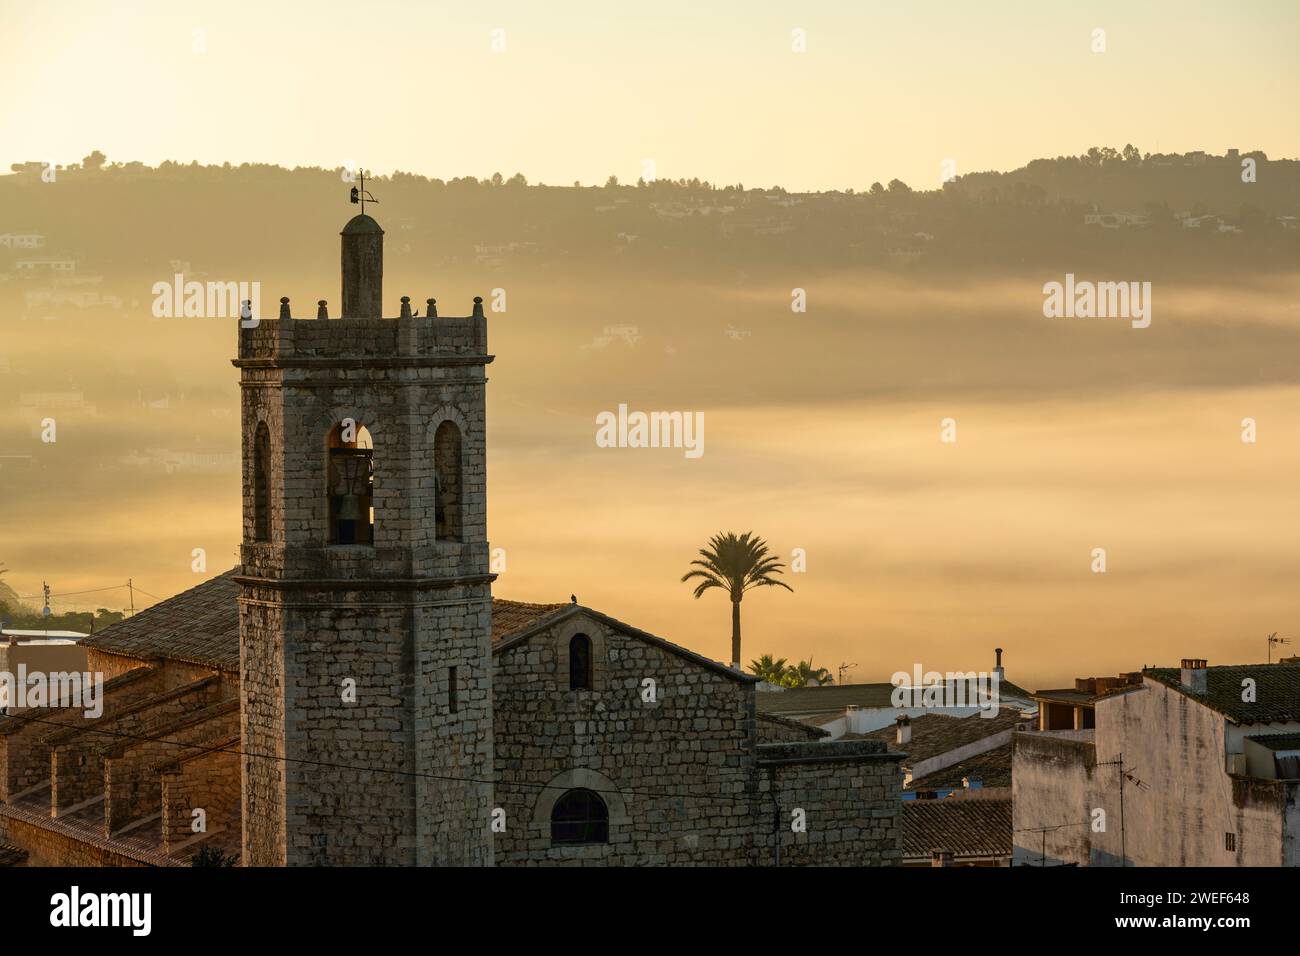 Church tower and village building at Lliber, Costa Blanca, Marina Alta, Alicante province, Spain - stock photo Stock Photo